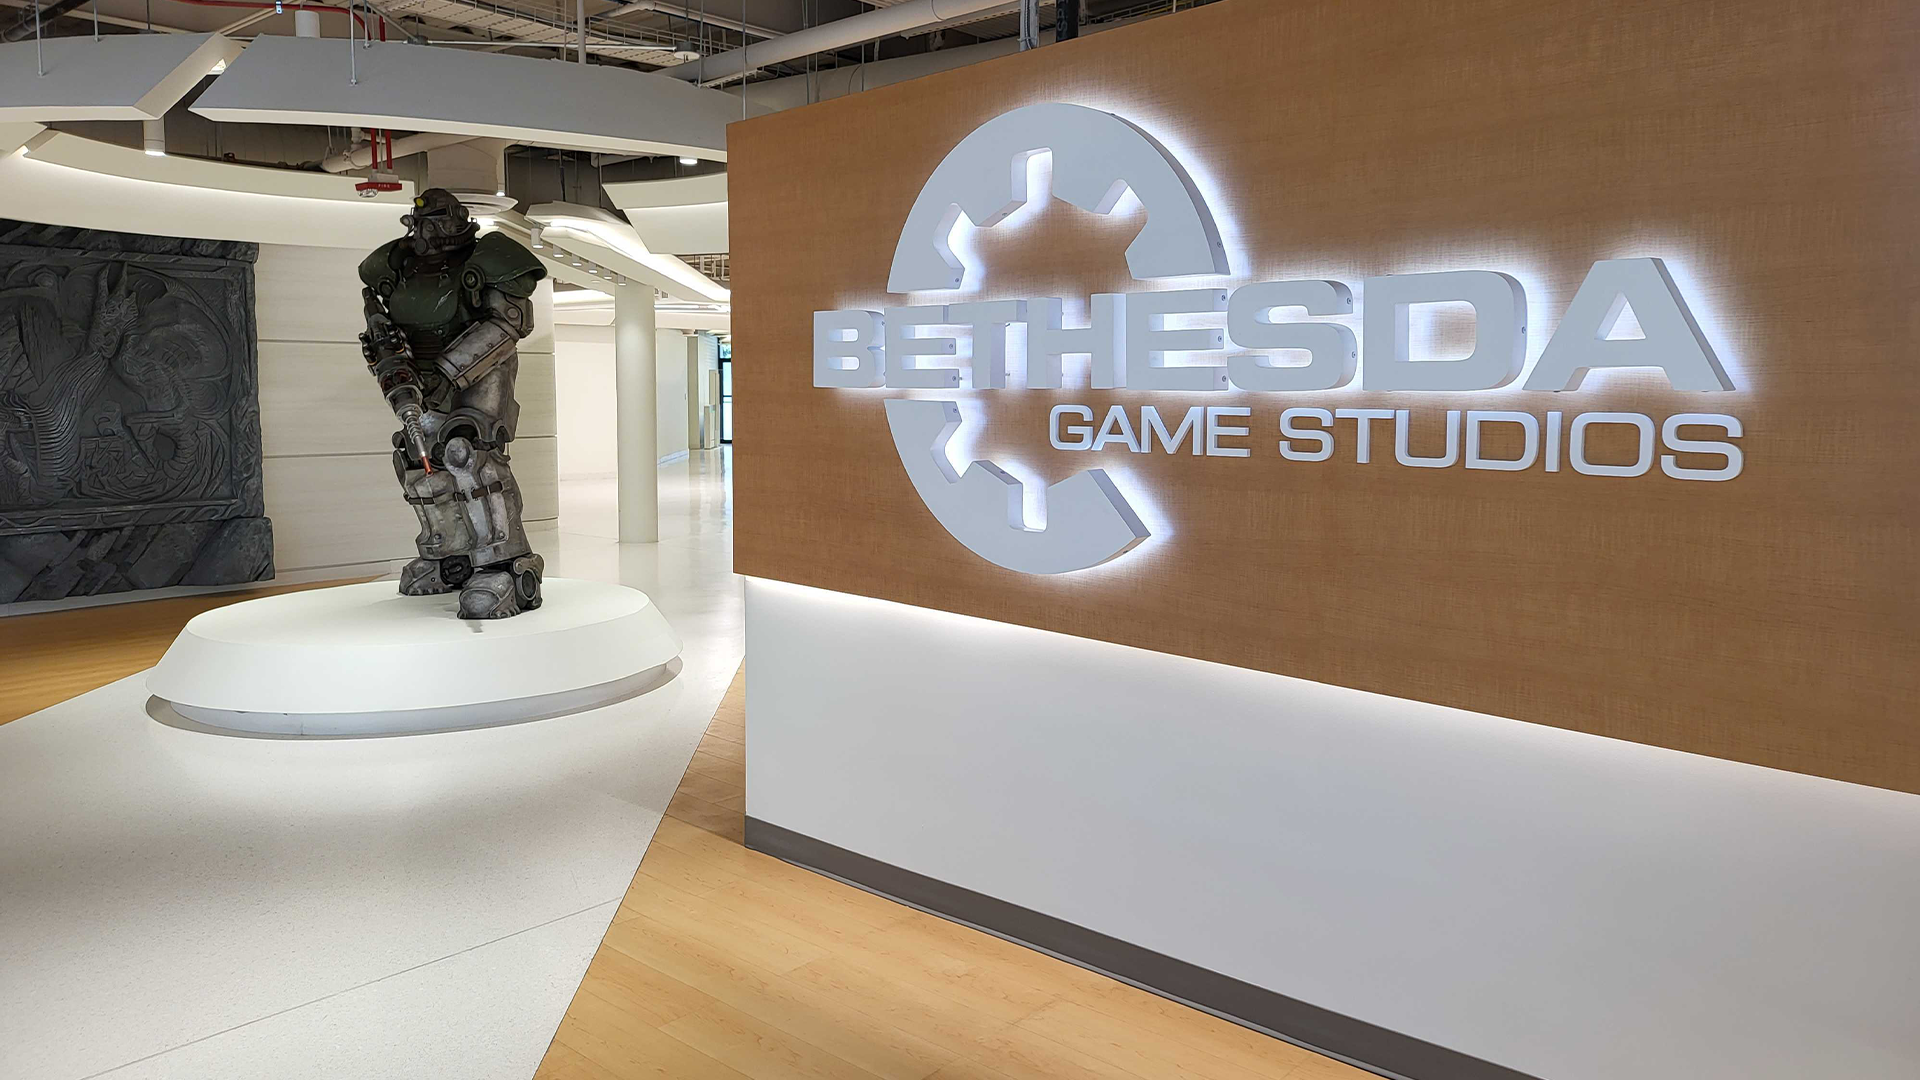 The Future of Bethesda Game Studios